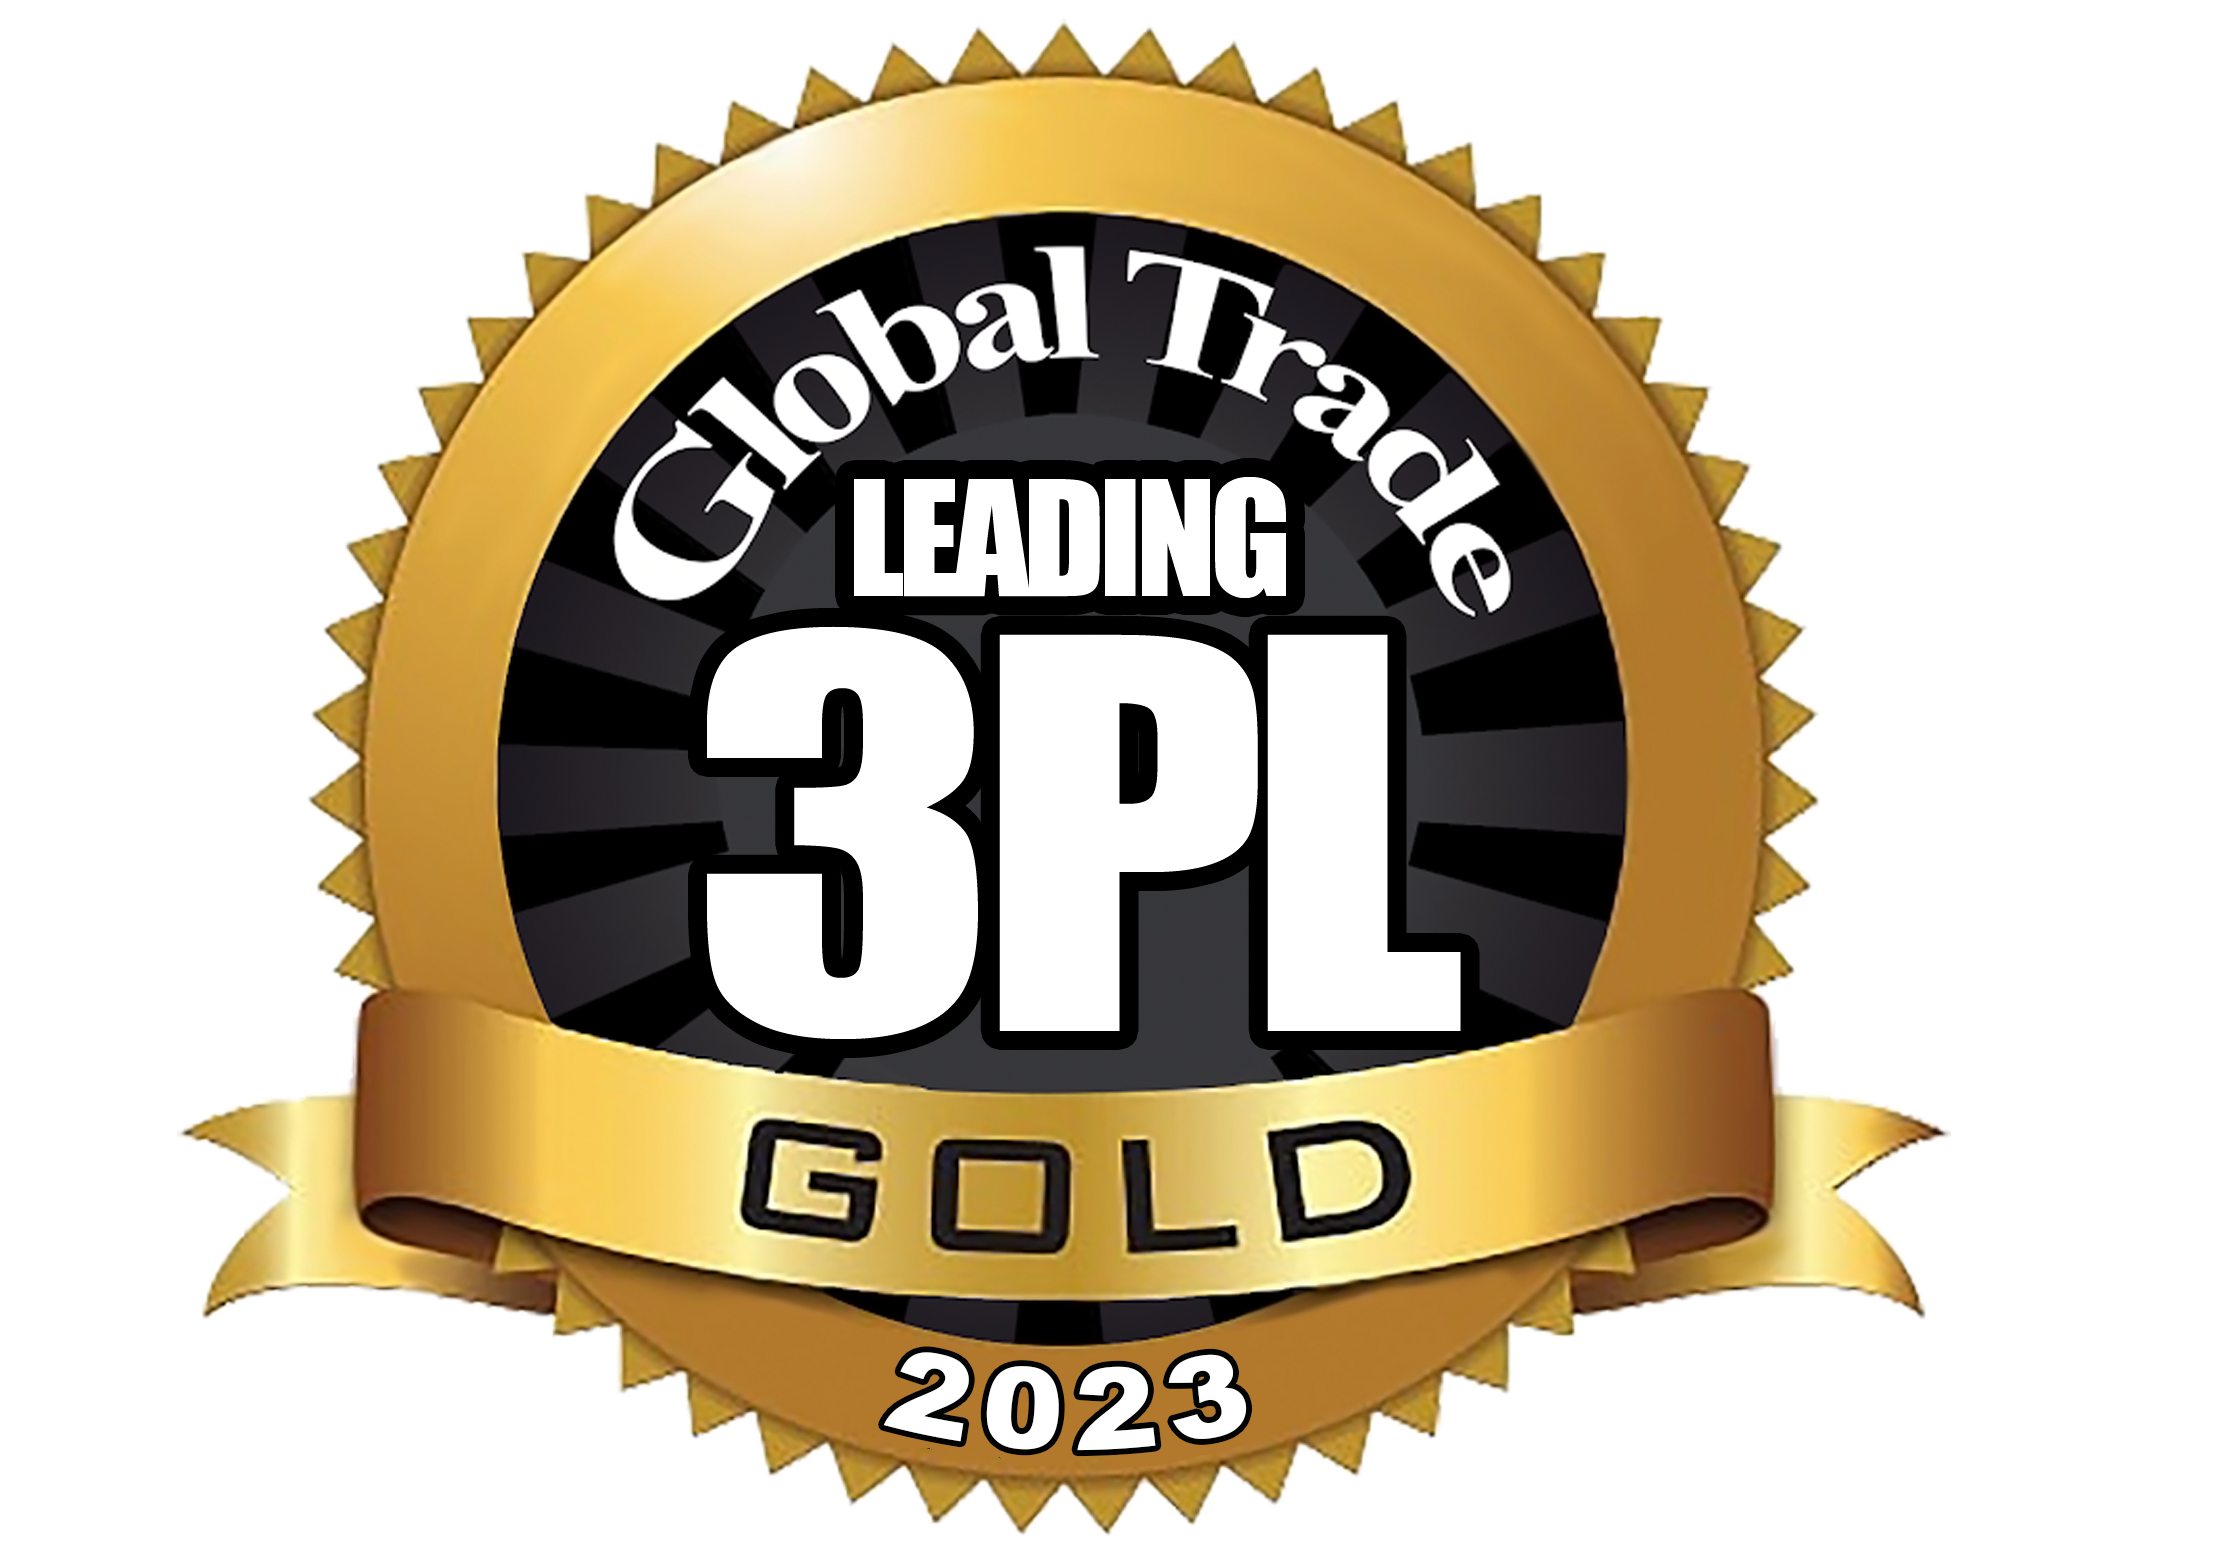 Global Trade Top 3PL